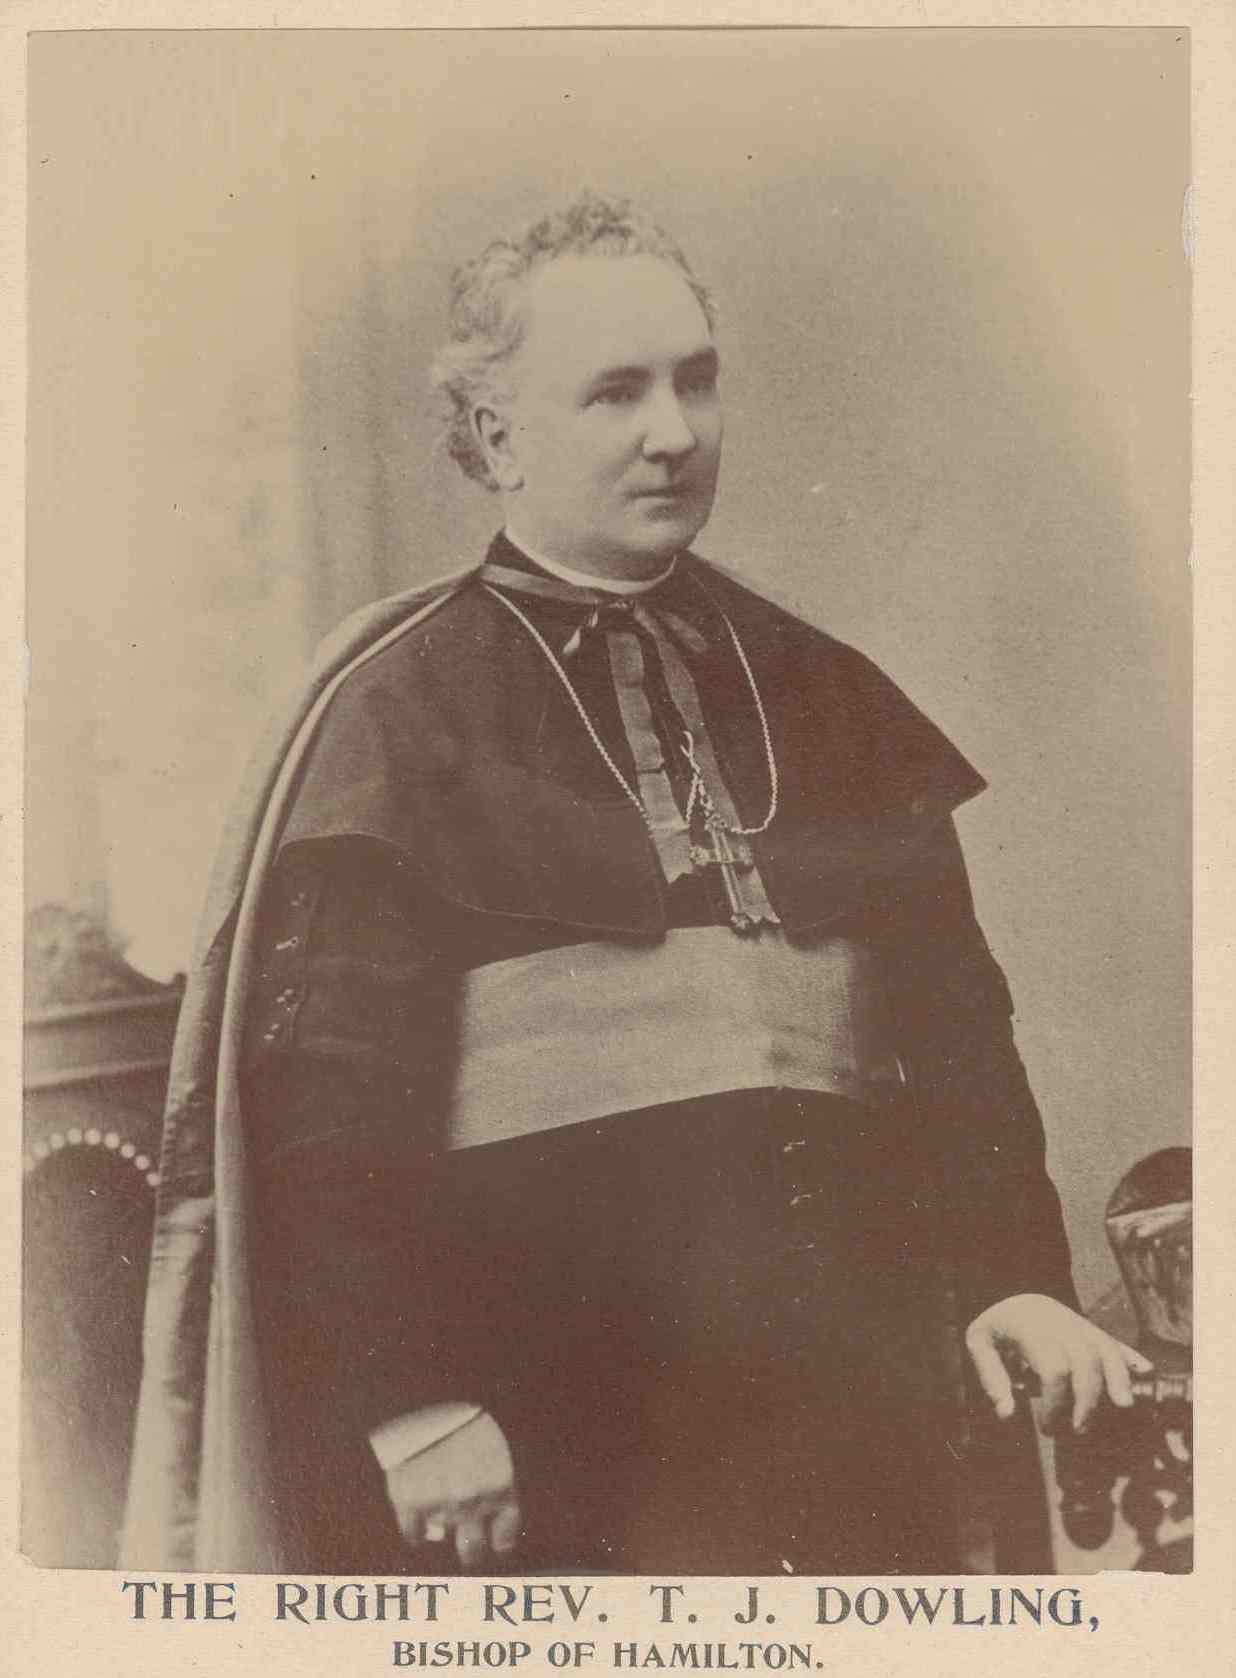 photograph of Bishop Thomas J. Dowling